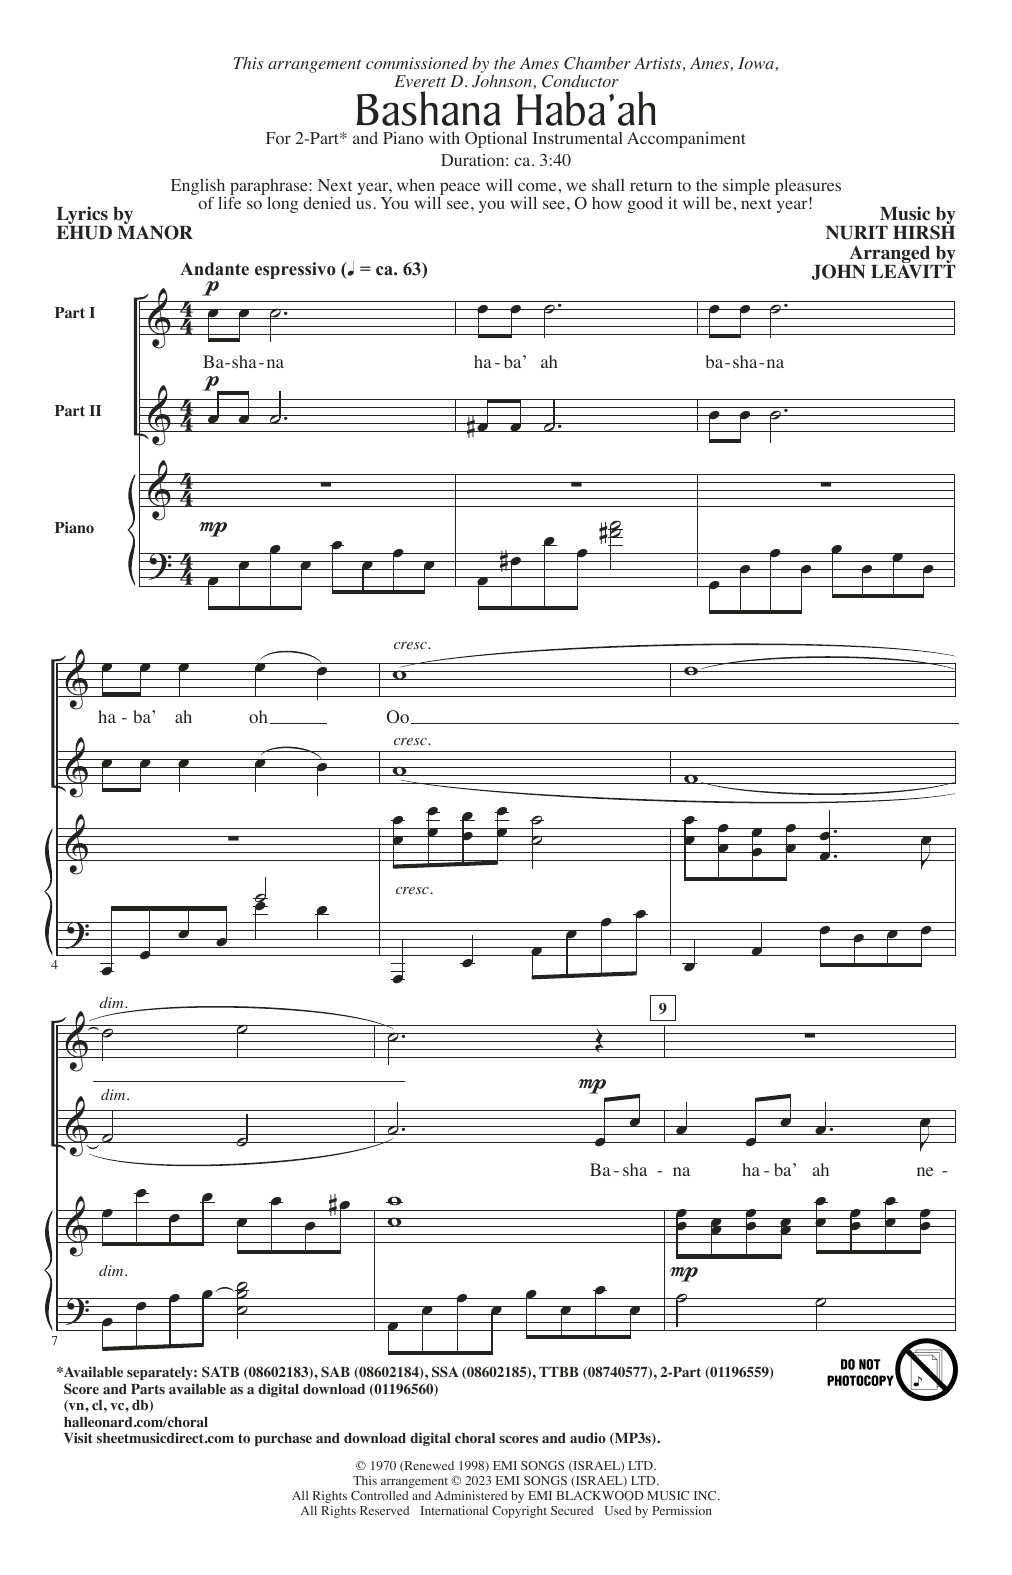 Download Nurit Hirsh Bashana Haba'ah (arr. John Leavitt) Sheet Music and learn how to play TTBB Choir PDF digital score in minutes